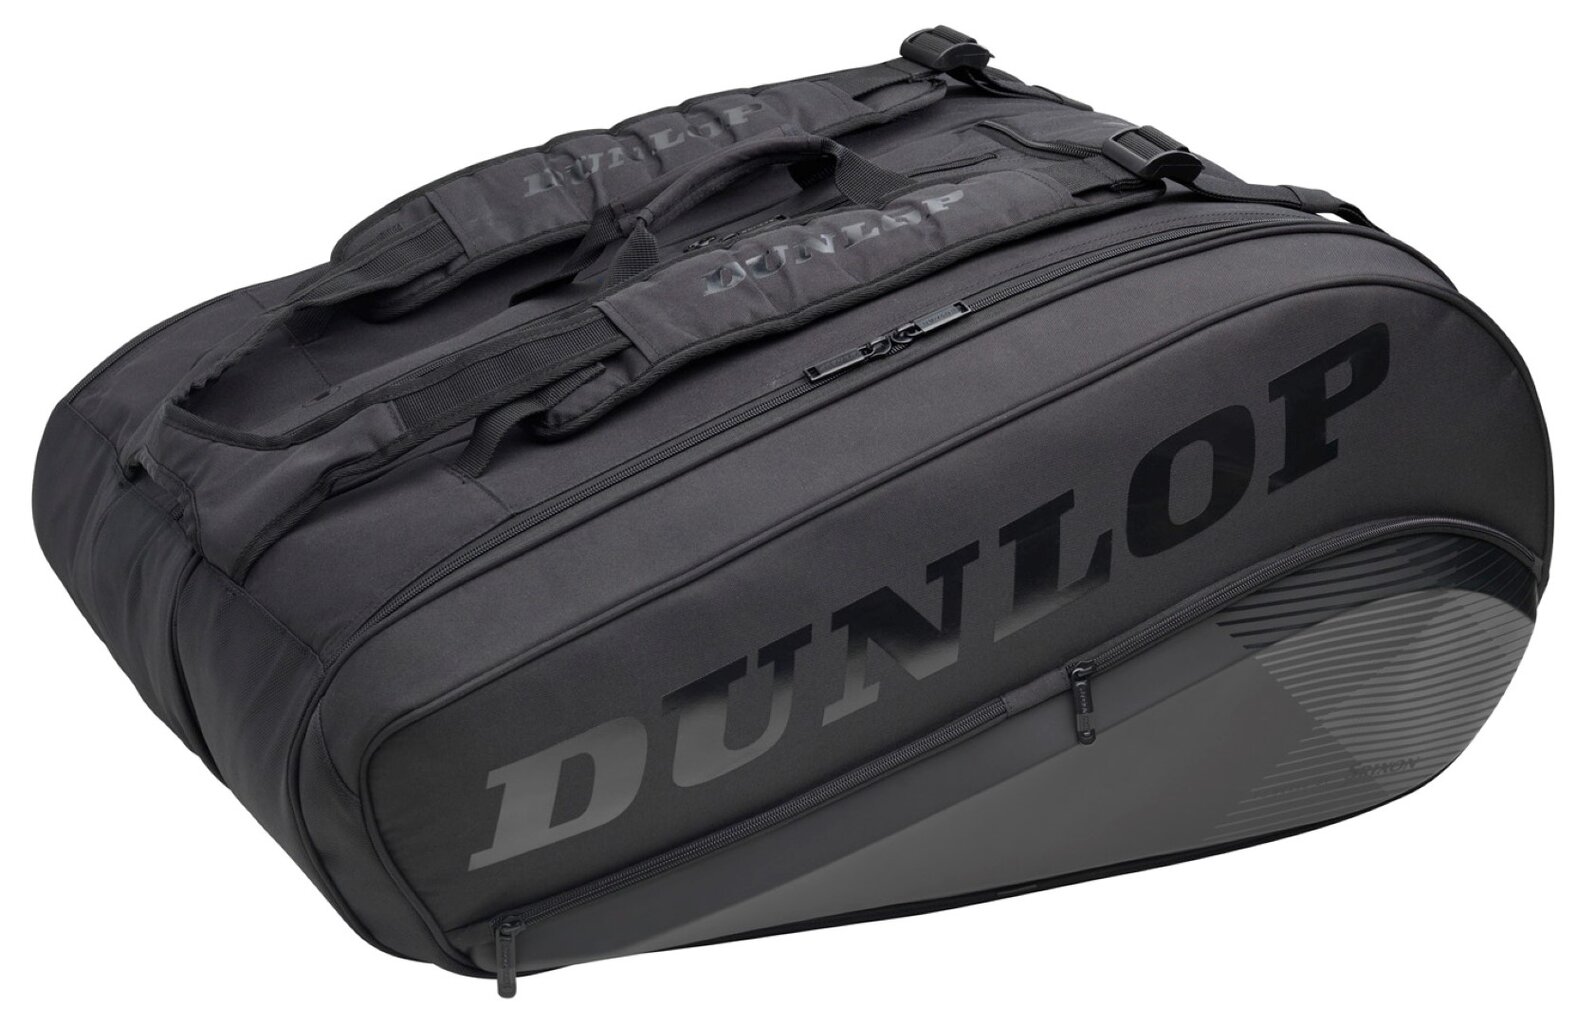 Krepšys Dunlop CX PERFORMANCE 12 rakečių kaina ir informacija | Lauko teniso prekės | pigu.lt